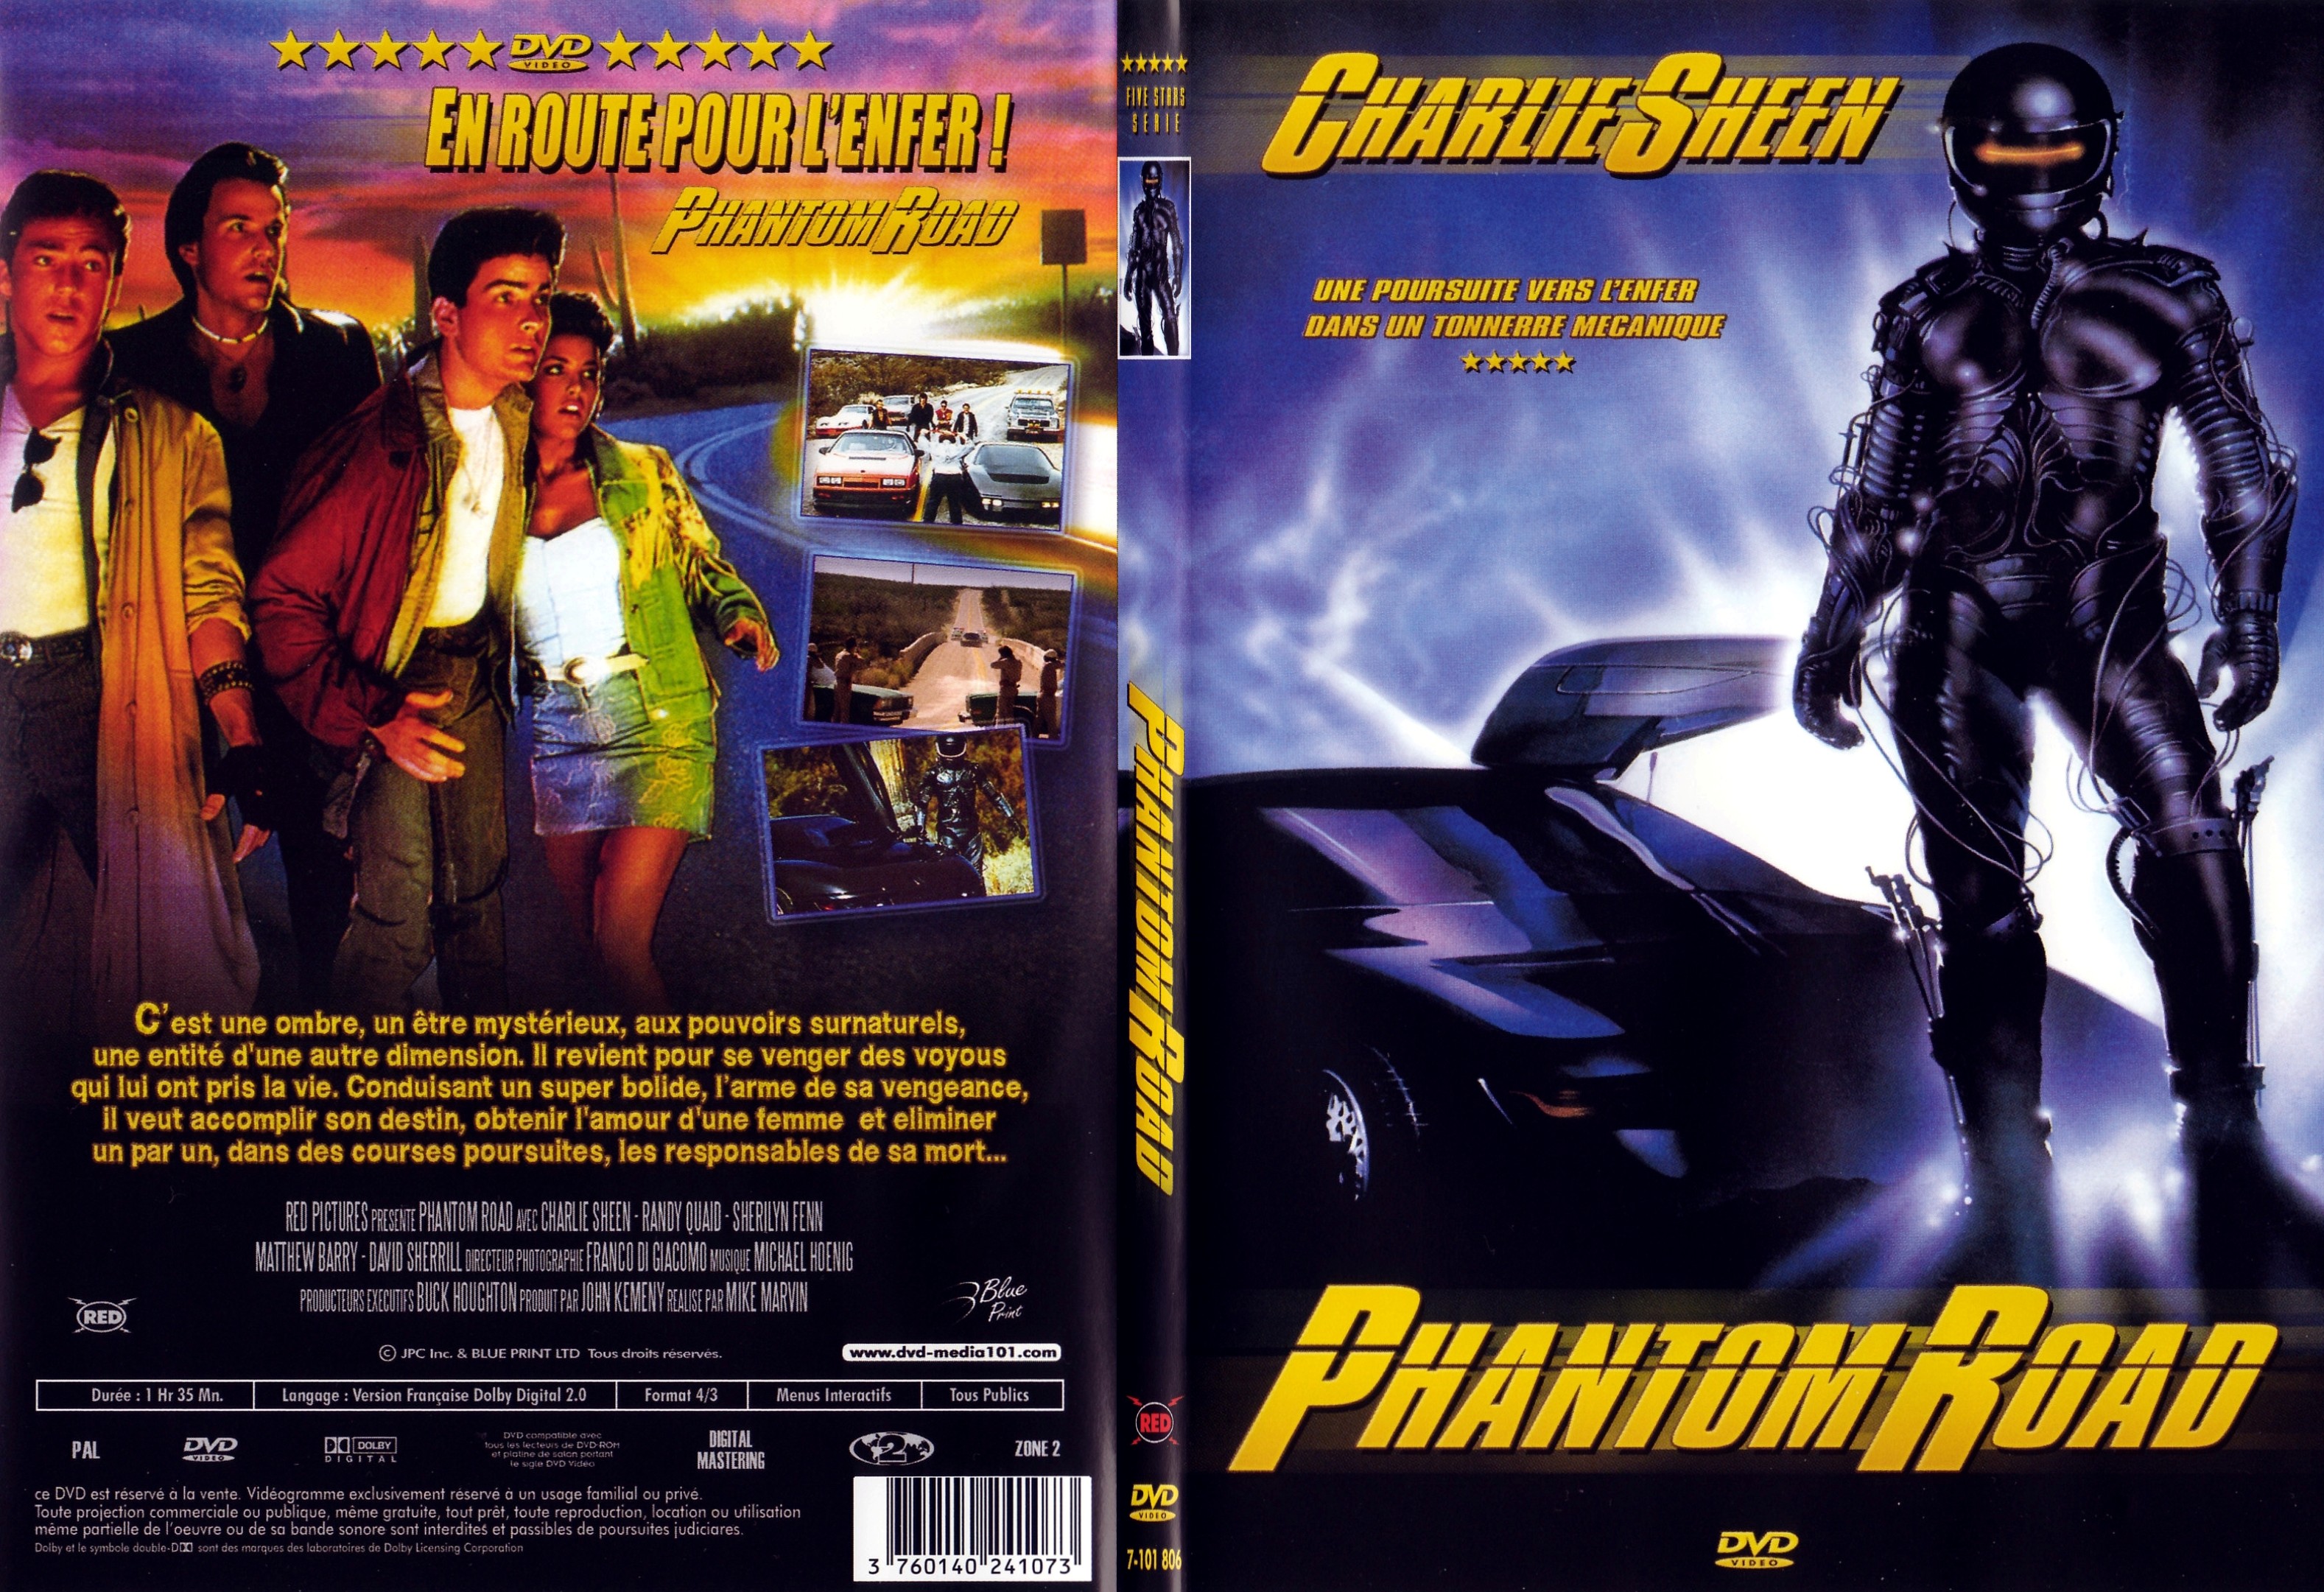 Jaquette DVD Phantom Road - SLIM